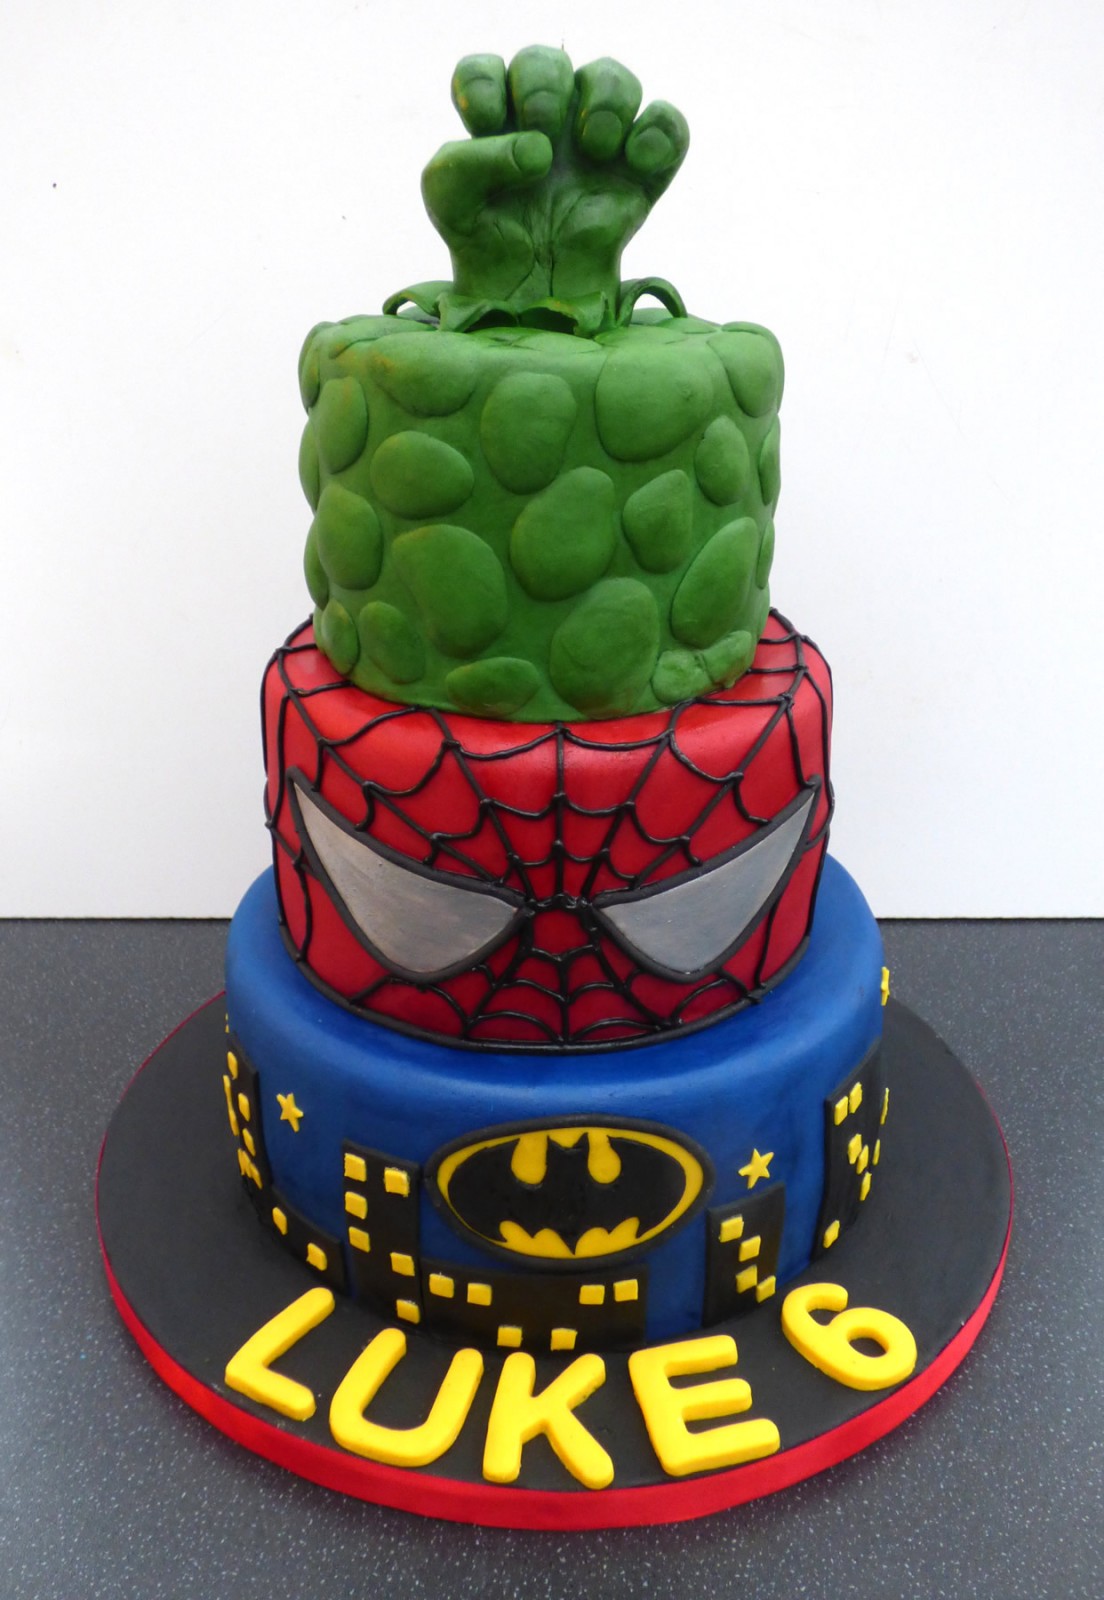 Marvel Super Heroes Birthday Cake | Susie's Cakes